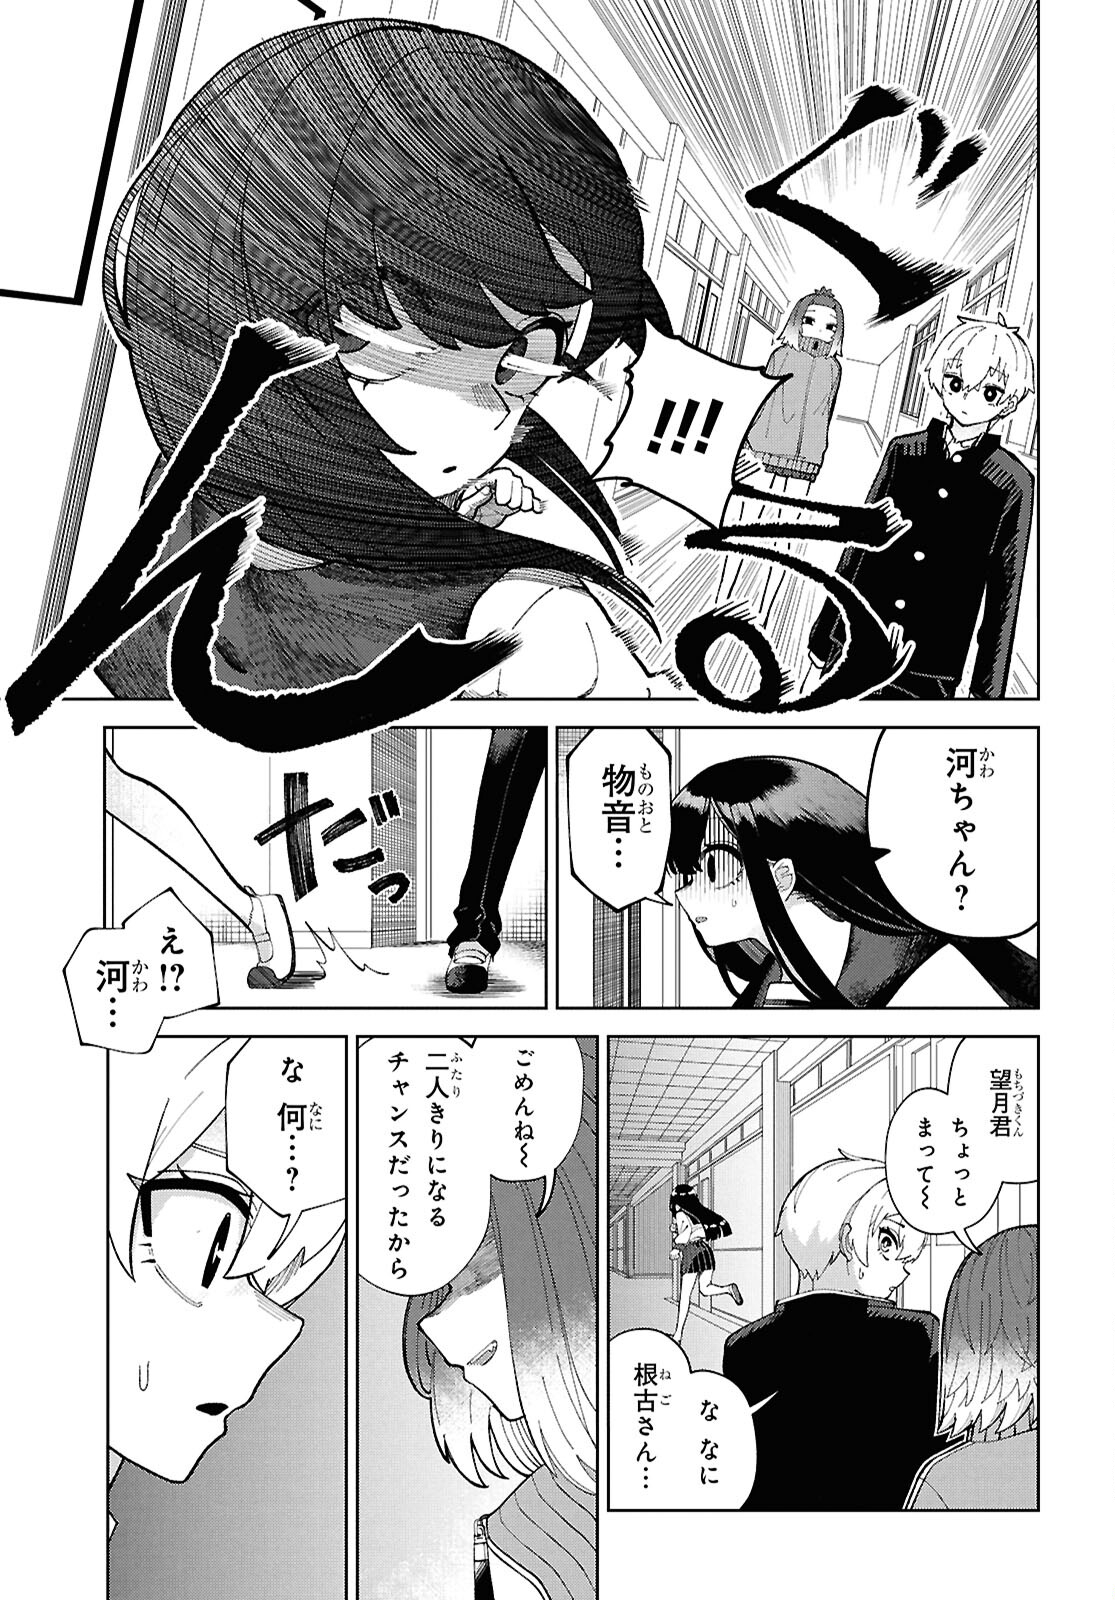 Garuru Girl - Chapter 4 - Page 15